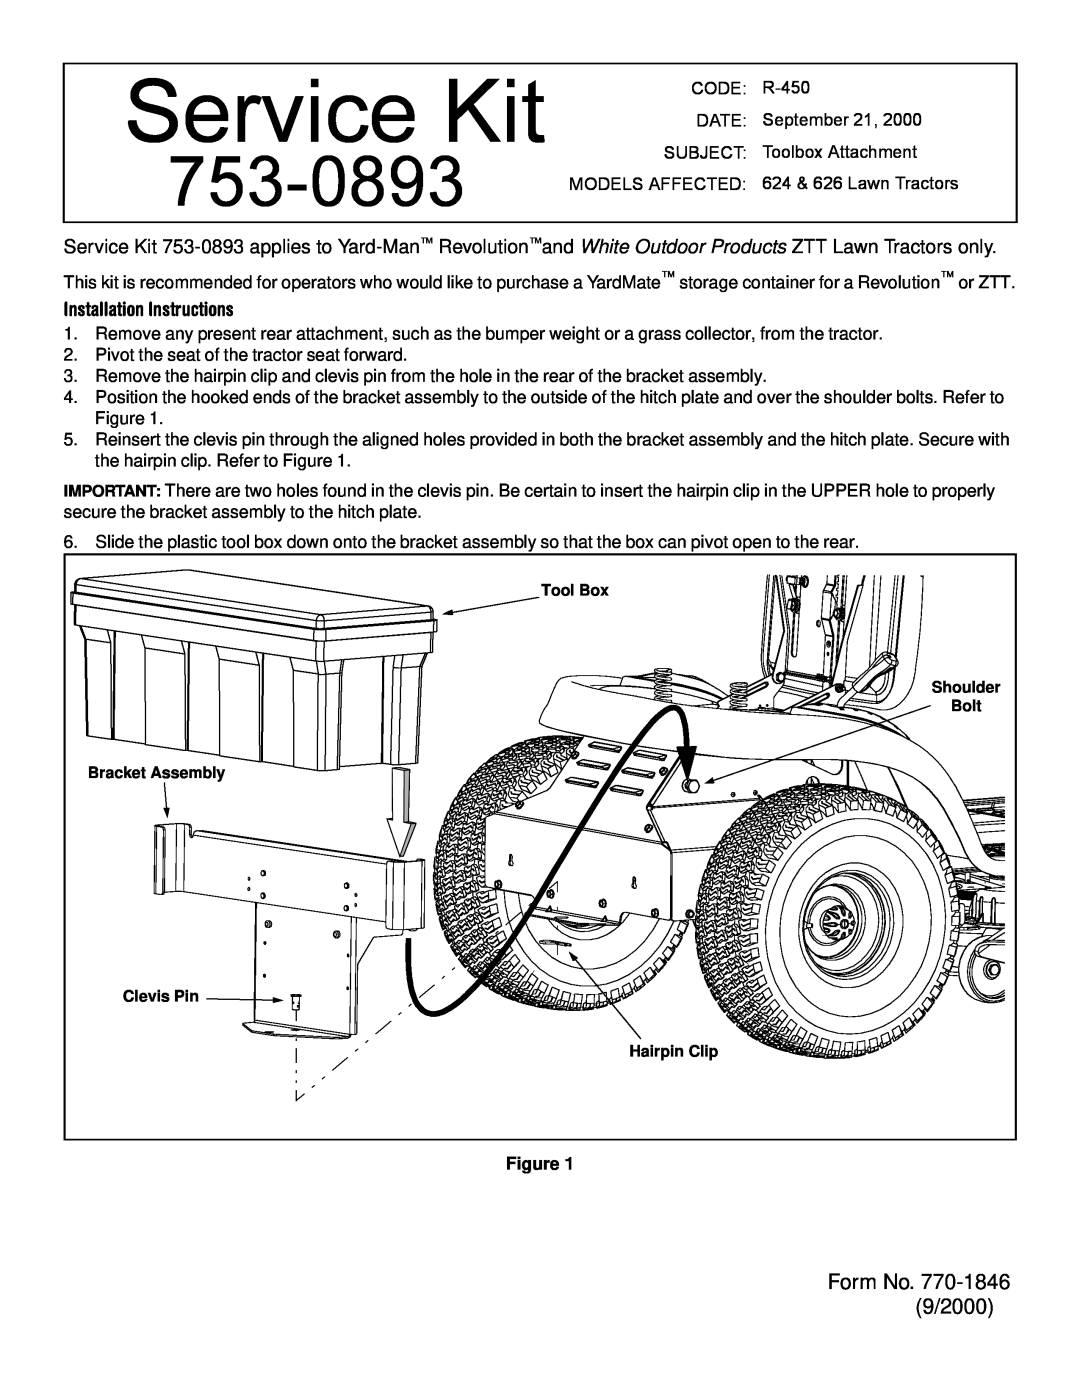 Yard-Man 624, 626 installation instructions Service Kit, 753-0893, Form No. 9/2000, Installation Instructions 